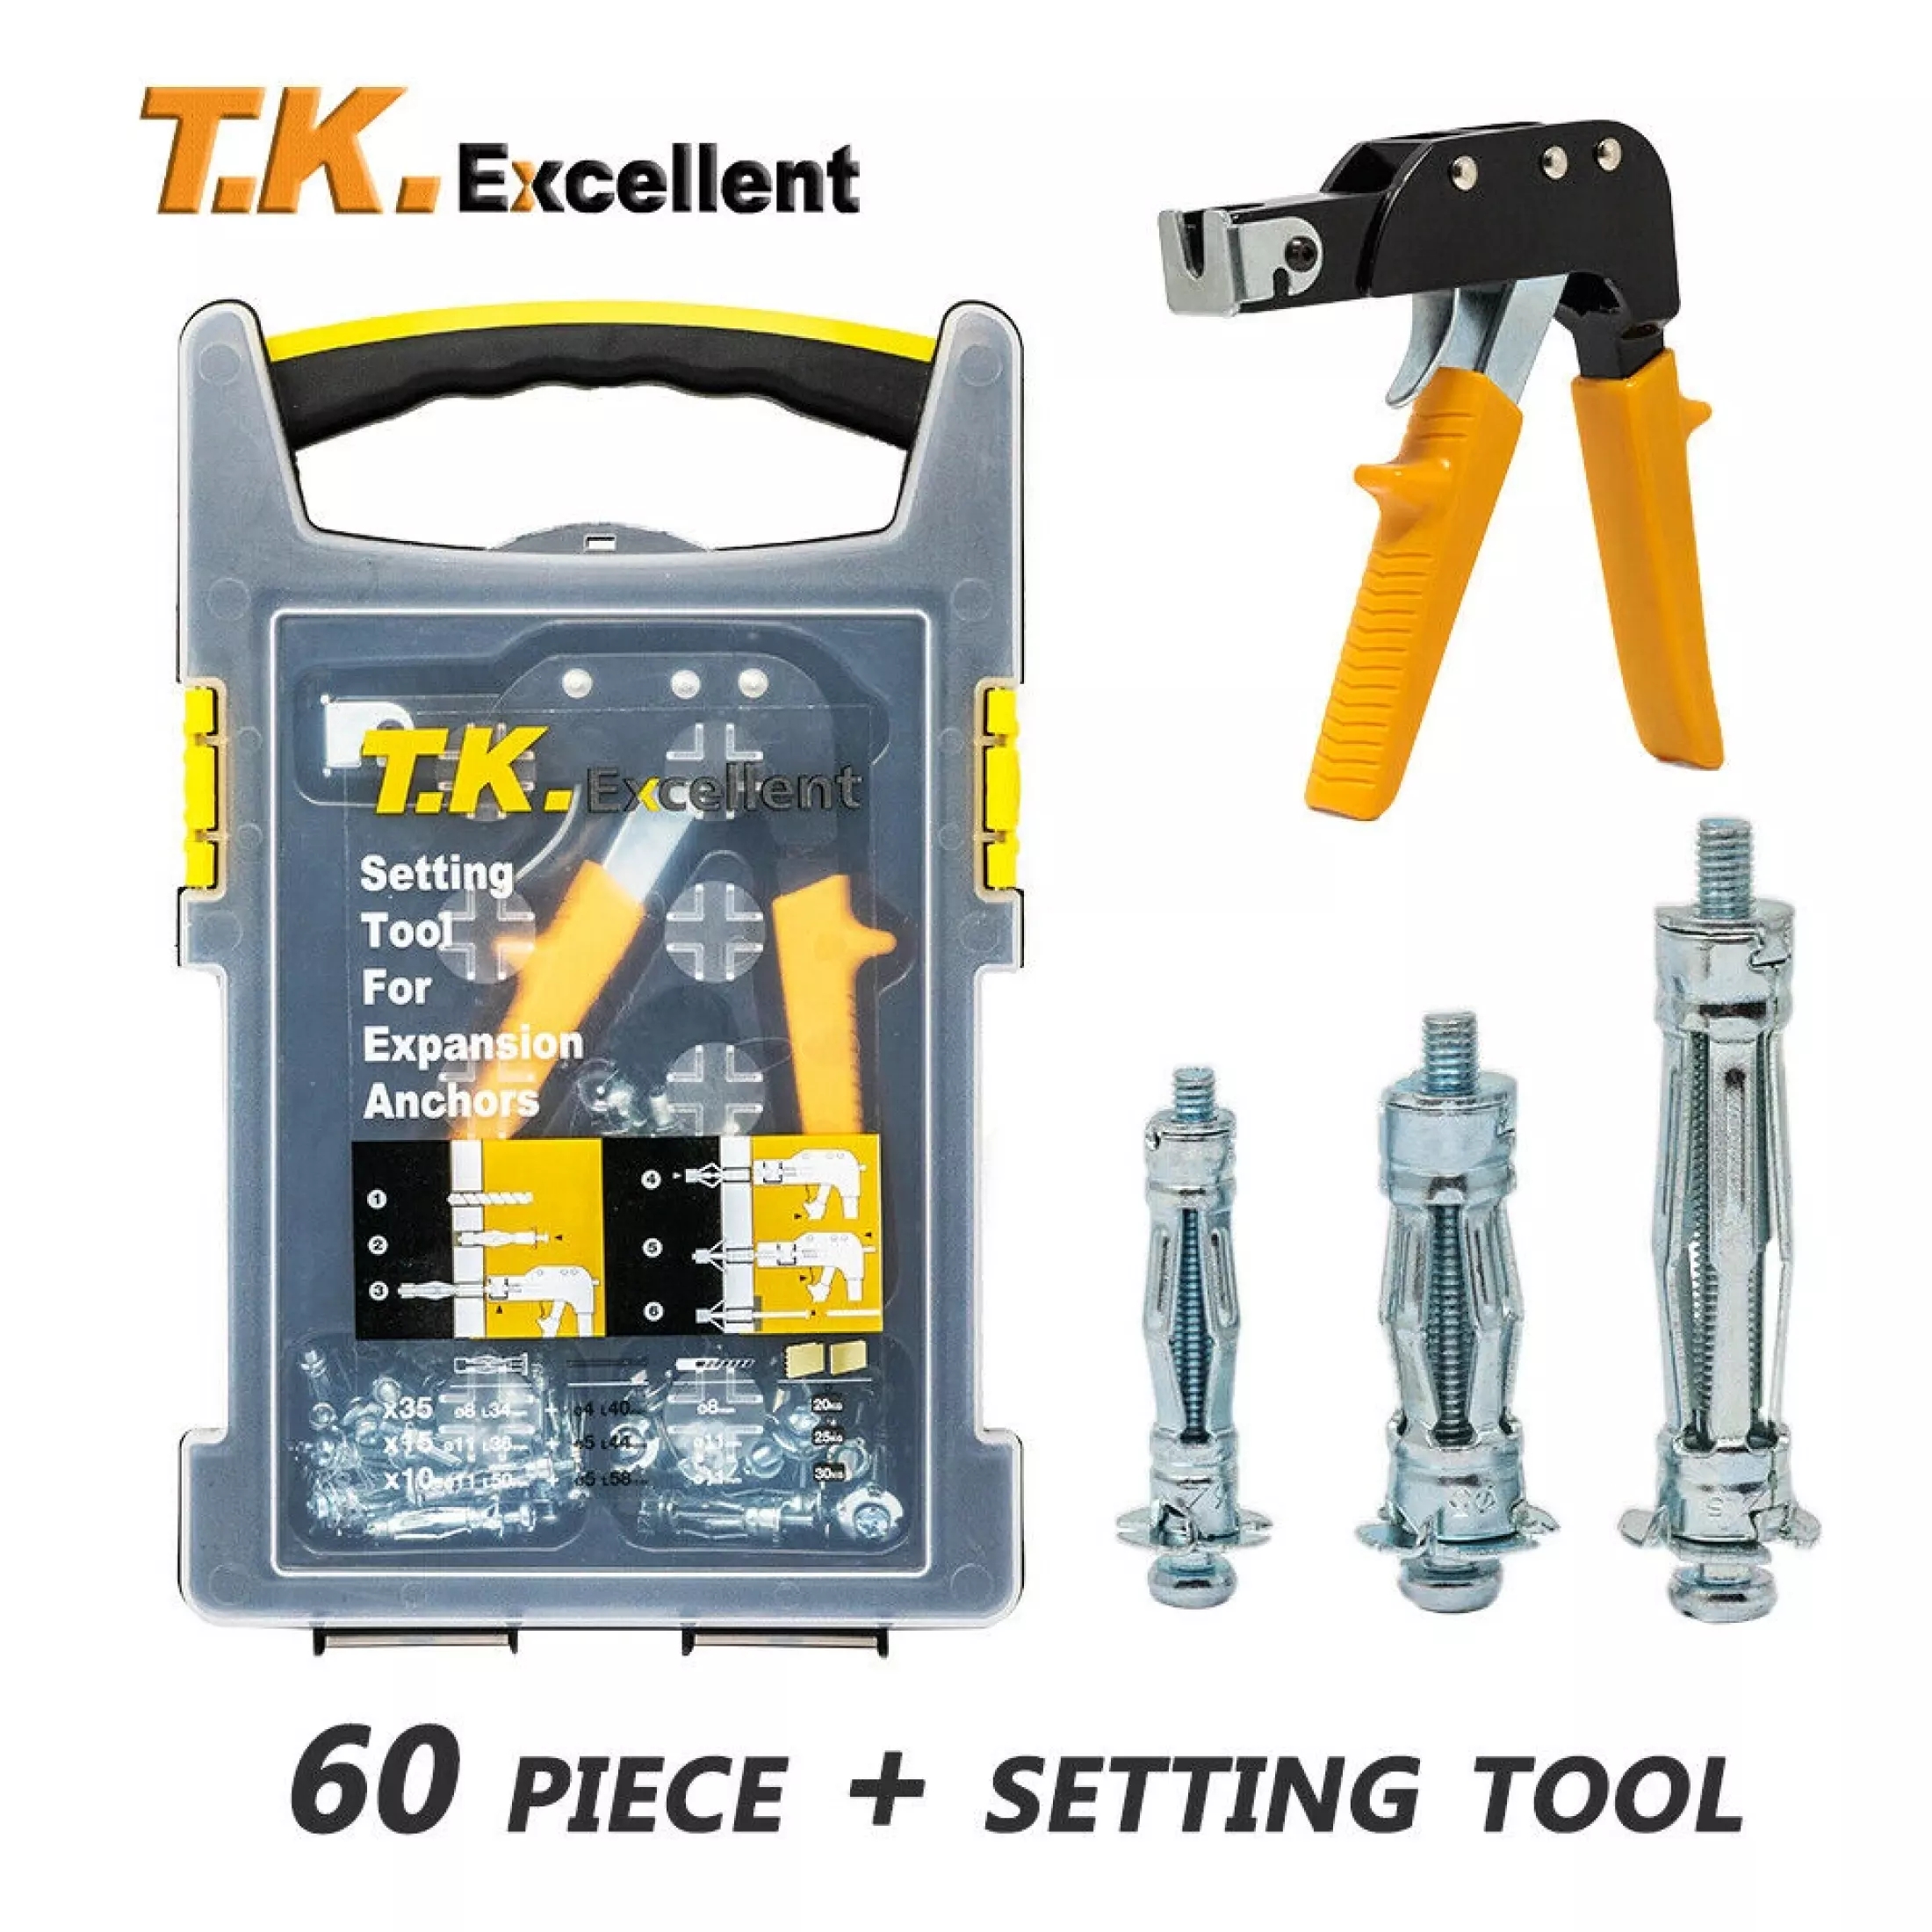 T.K.excellent t. k. excellent heavy duty metal setting tool, paick